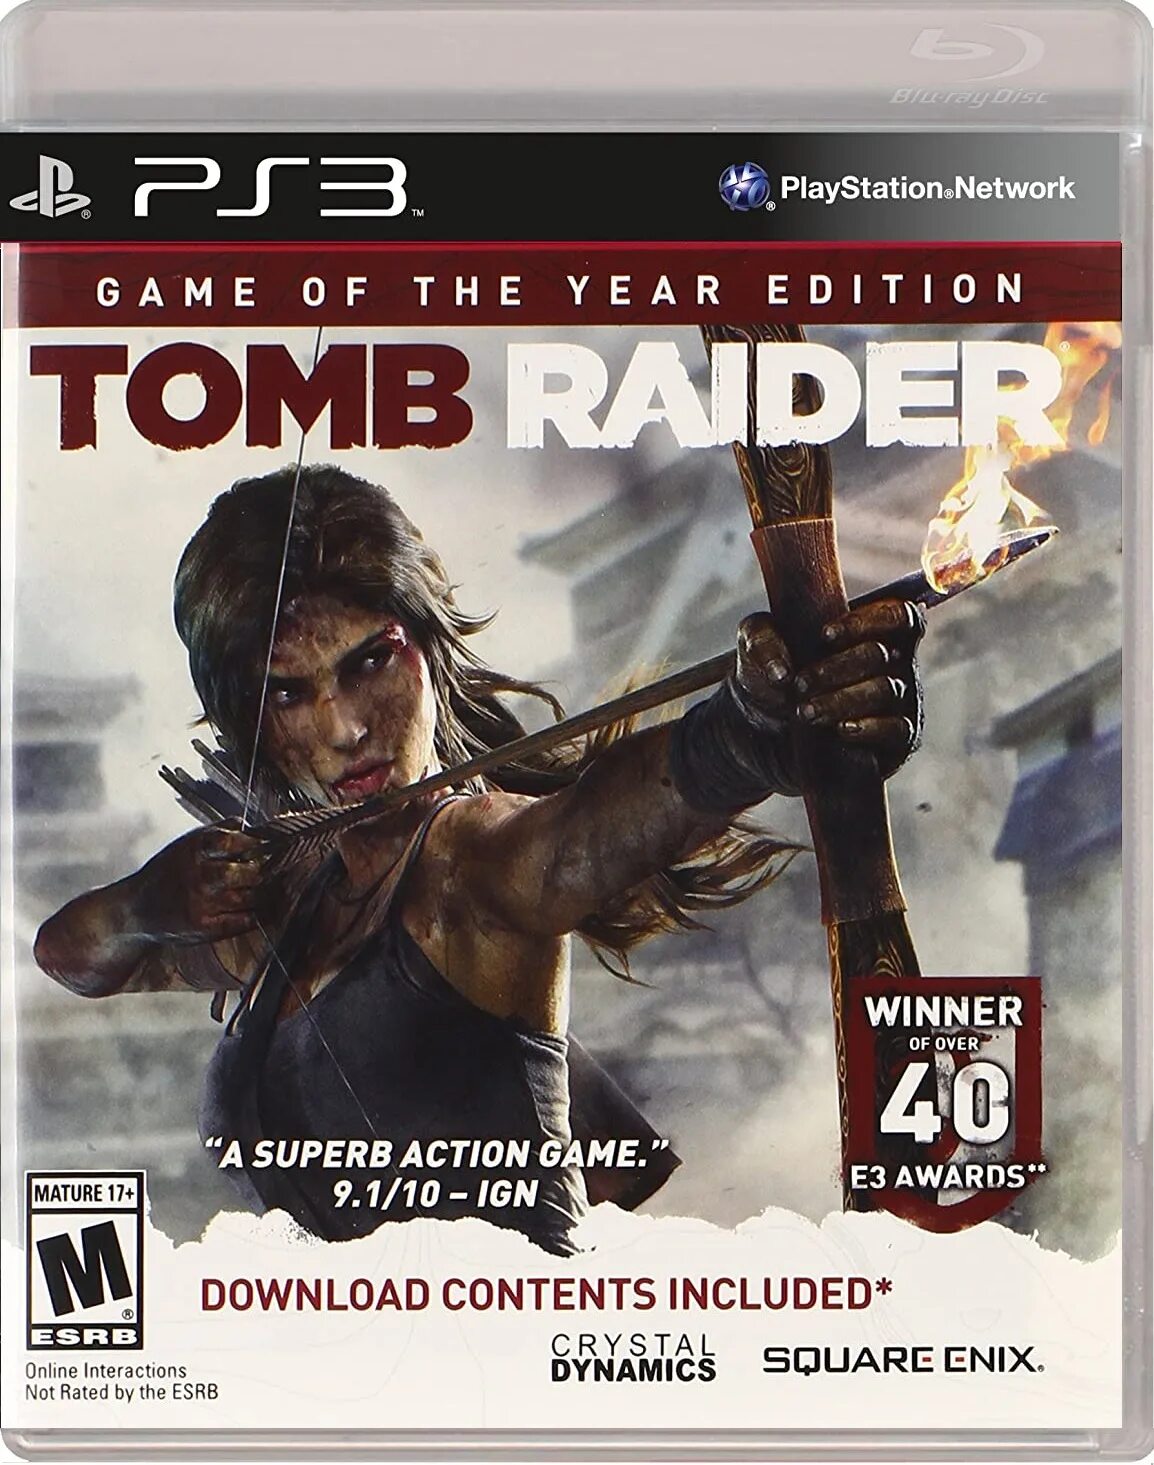 Game of the year игры. Томб Райдер сони плейстейшен 4. Tomb Raider Digital Edition ps3. Том Райдер на пс3 Crystal. Том Райдер сони плейстейшен.